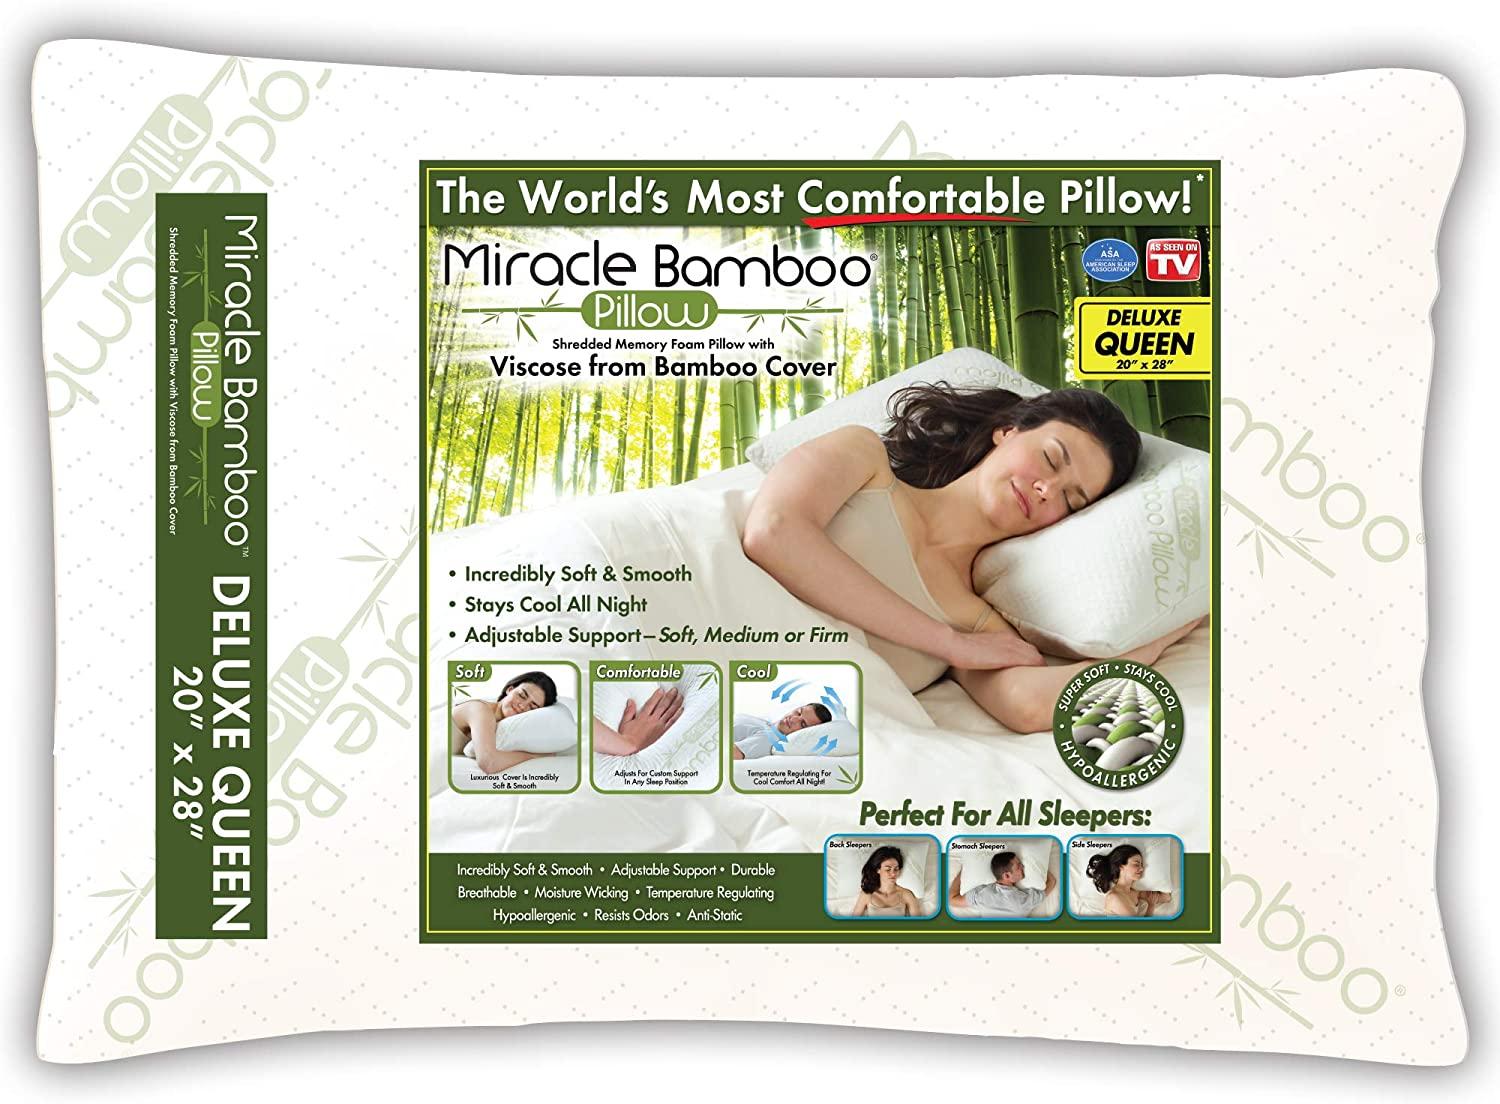 Ontel Miracle Bamboo Shredded Memory Foam Pillow for $14.99